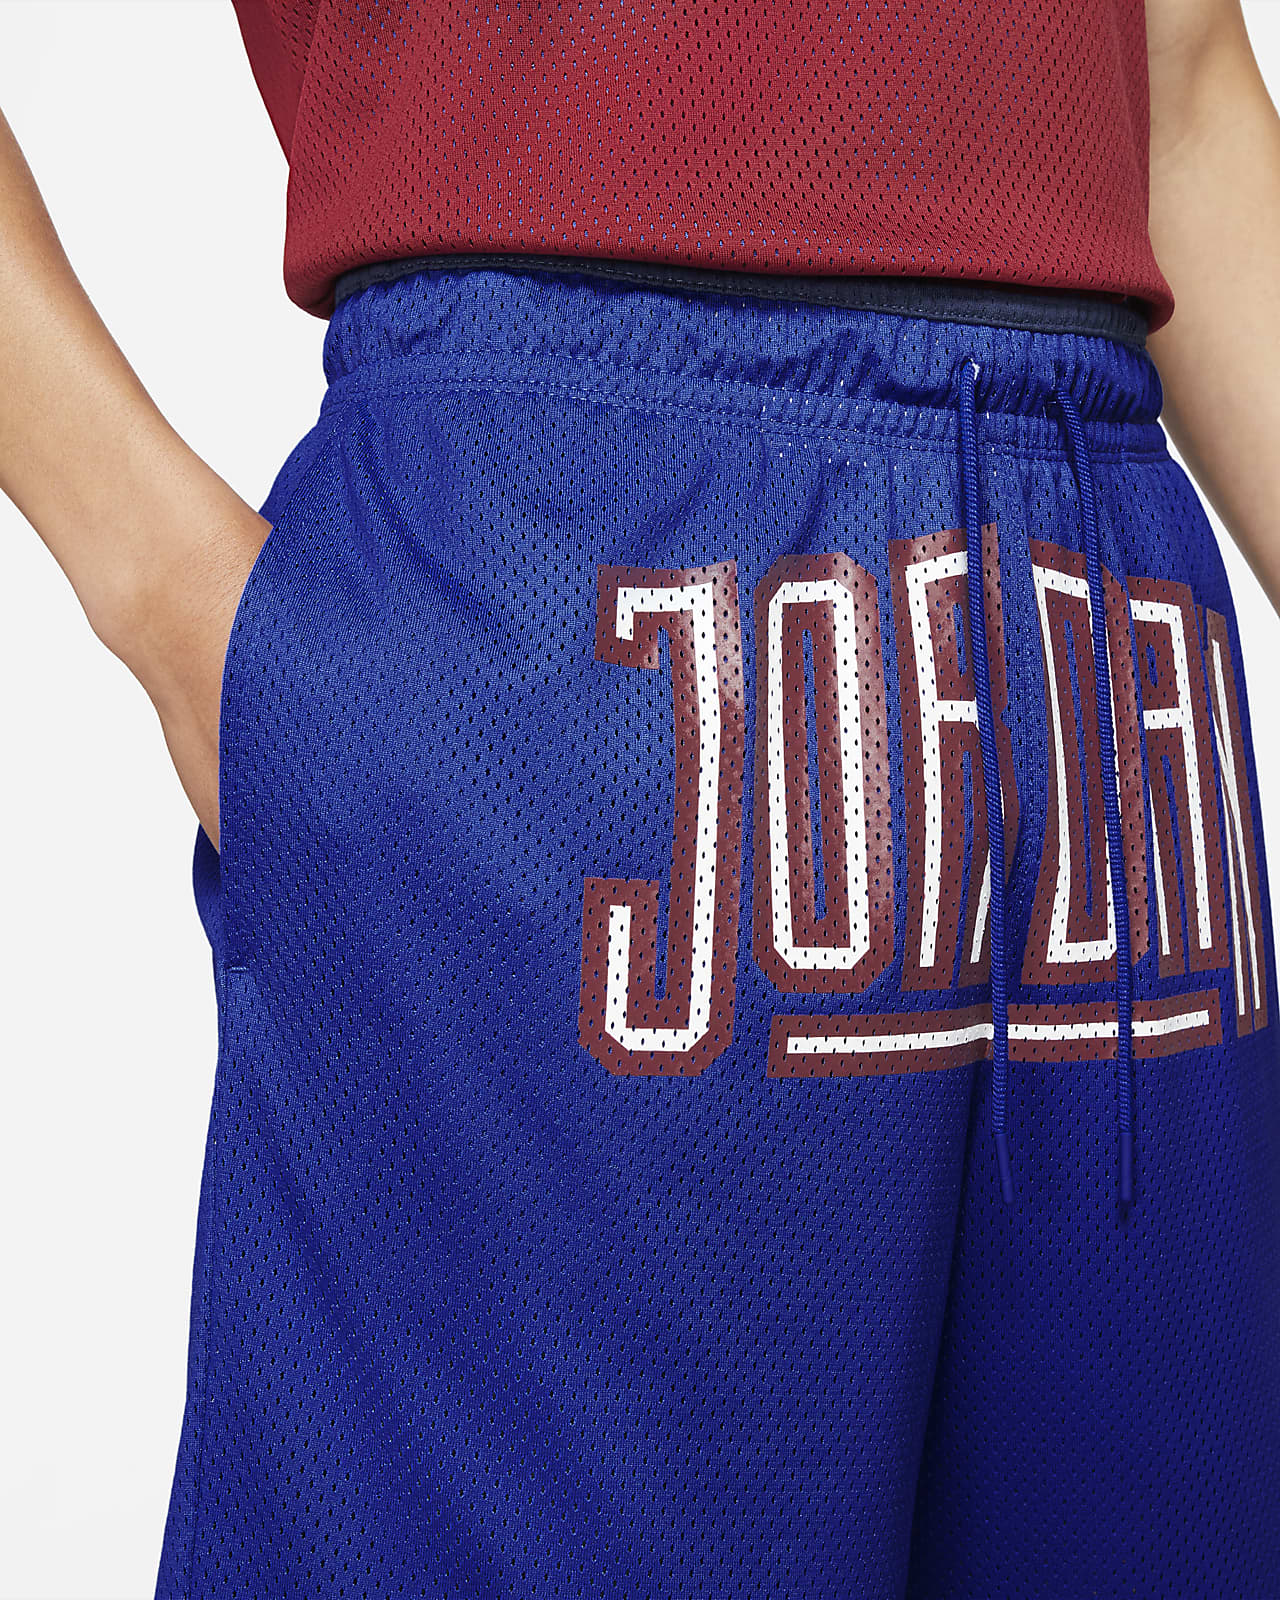 Jordan Sport DNA Men's Shorts. Nike JP